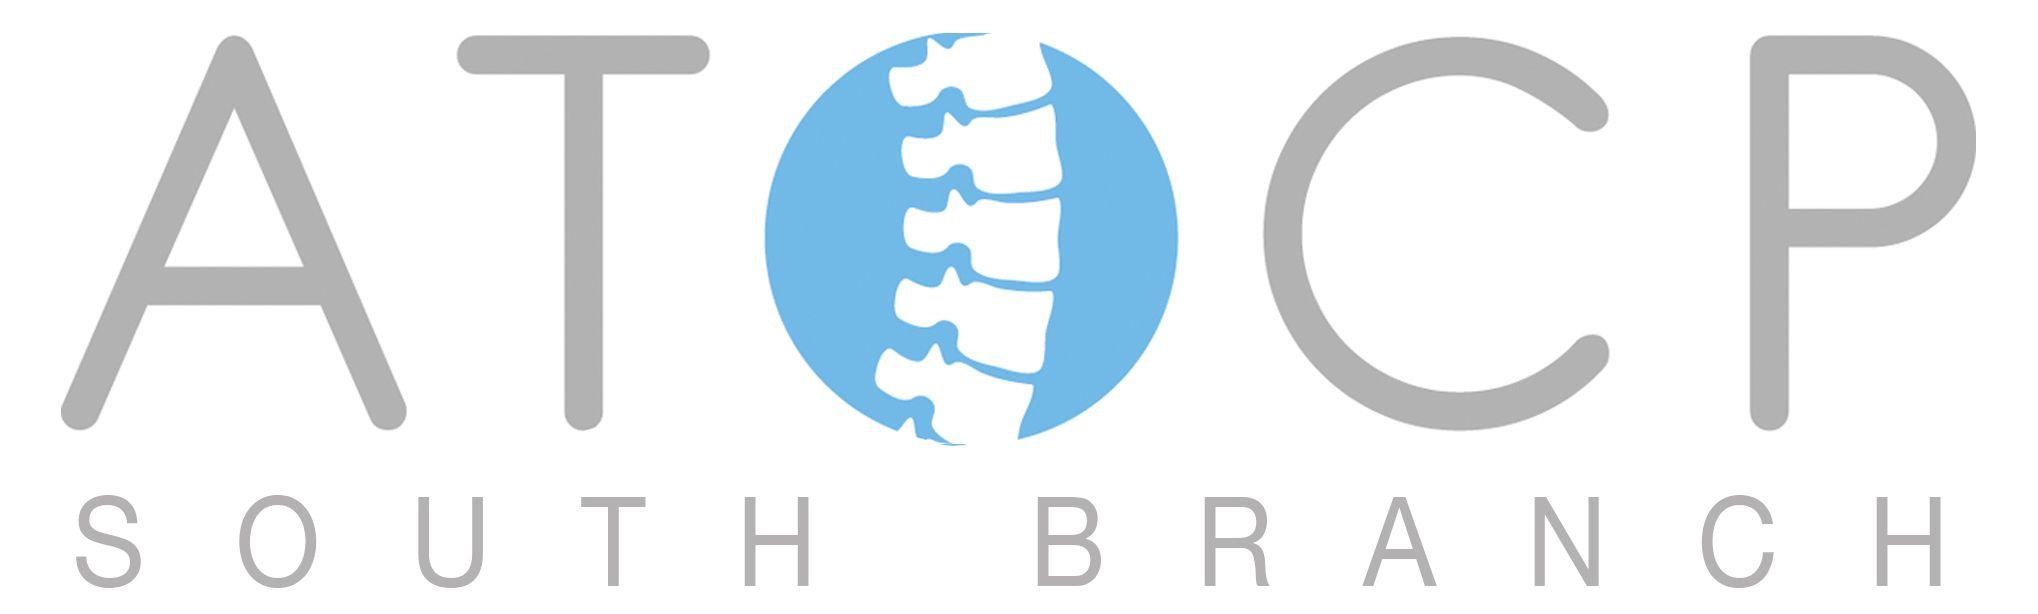 South Logo - ATOCP South logo. Association of Trauma and Orthopaedic Chartered